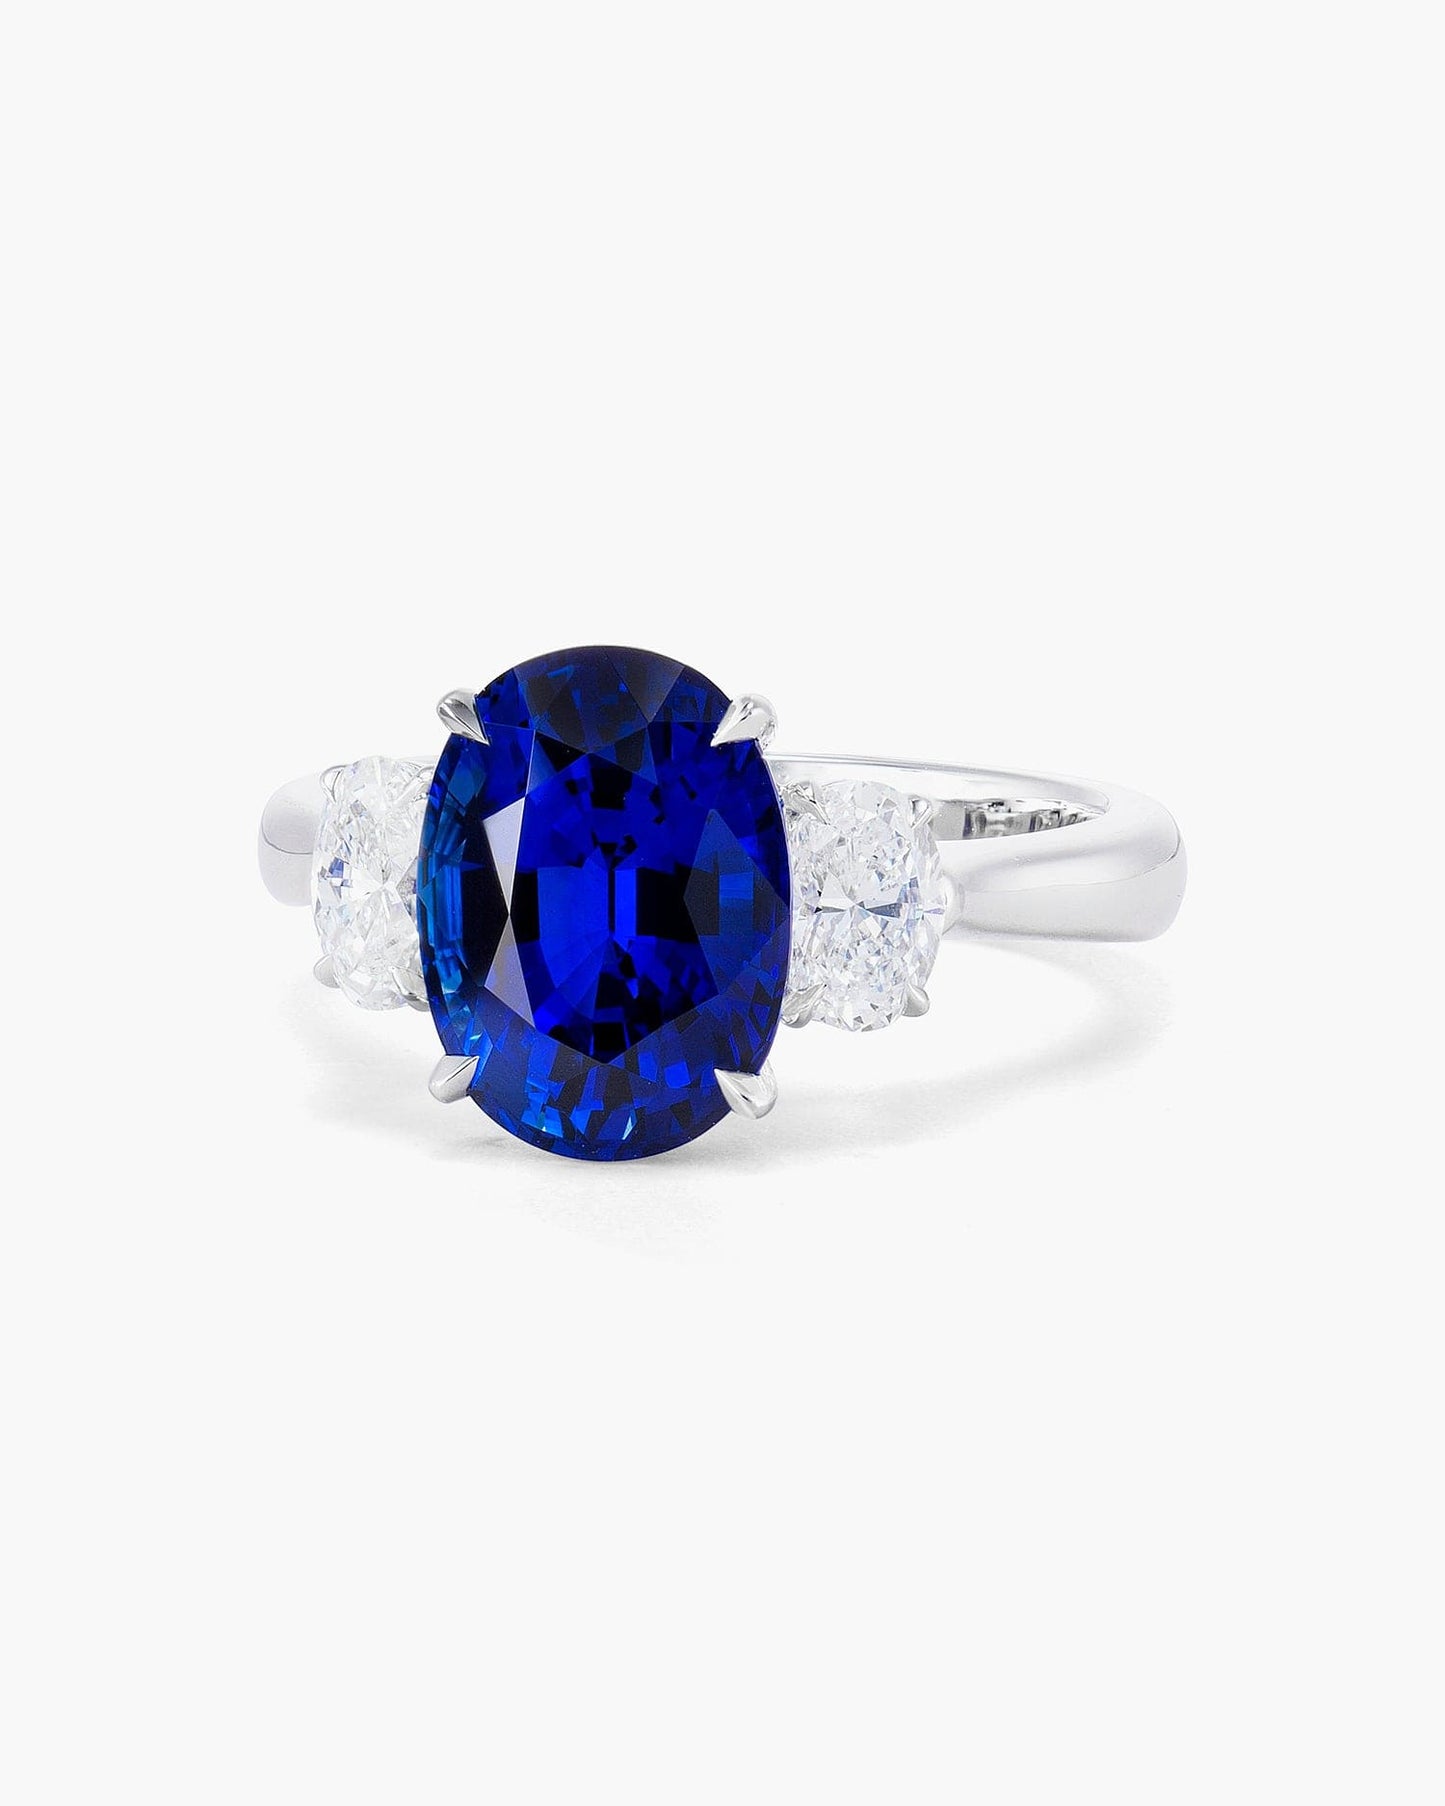 4.22 carat Oval Shape Ceylon Sapphire and Diamond Ring